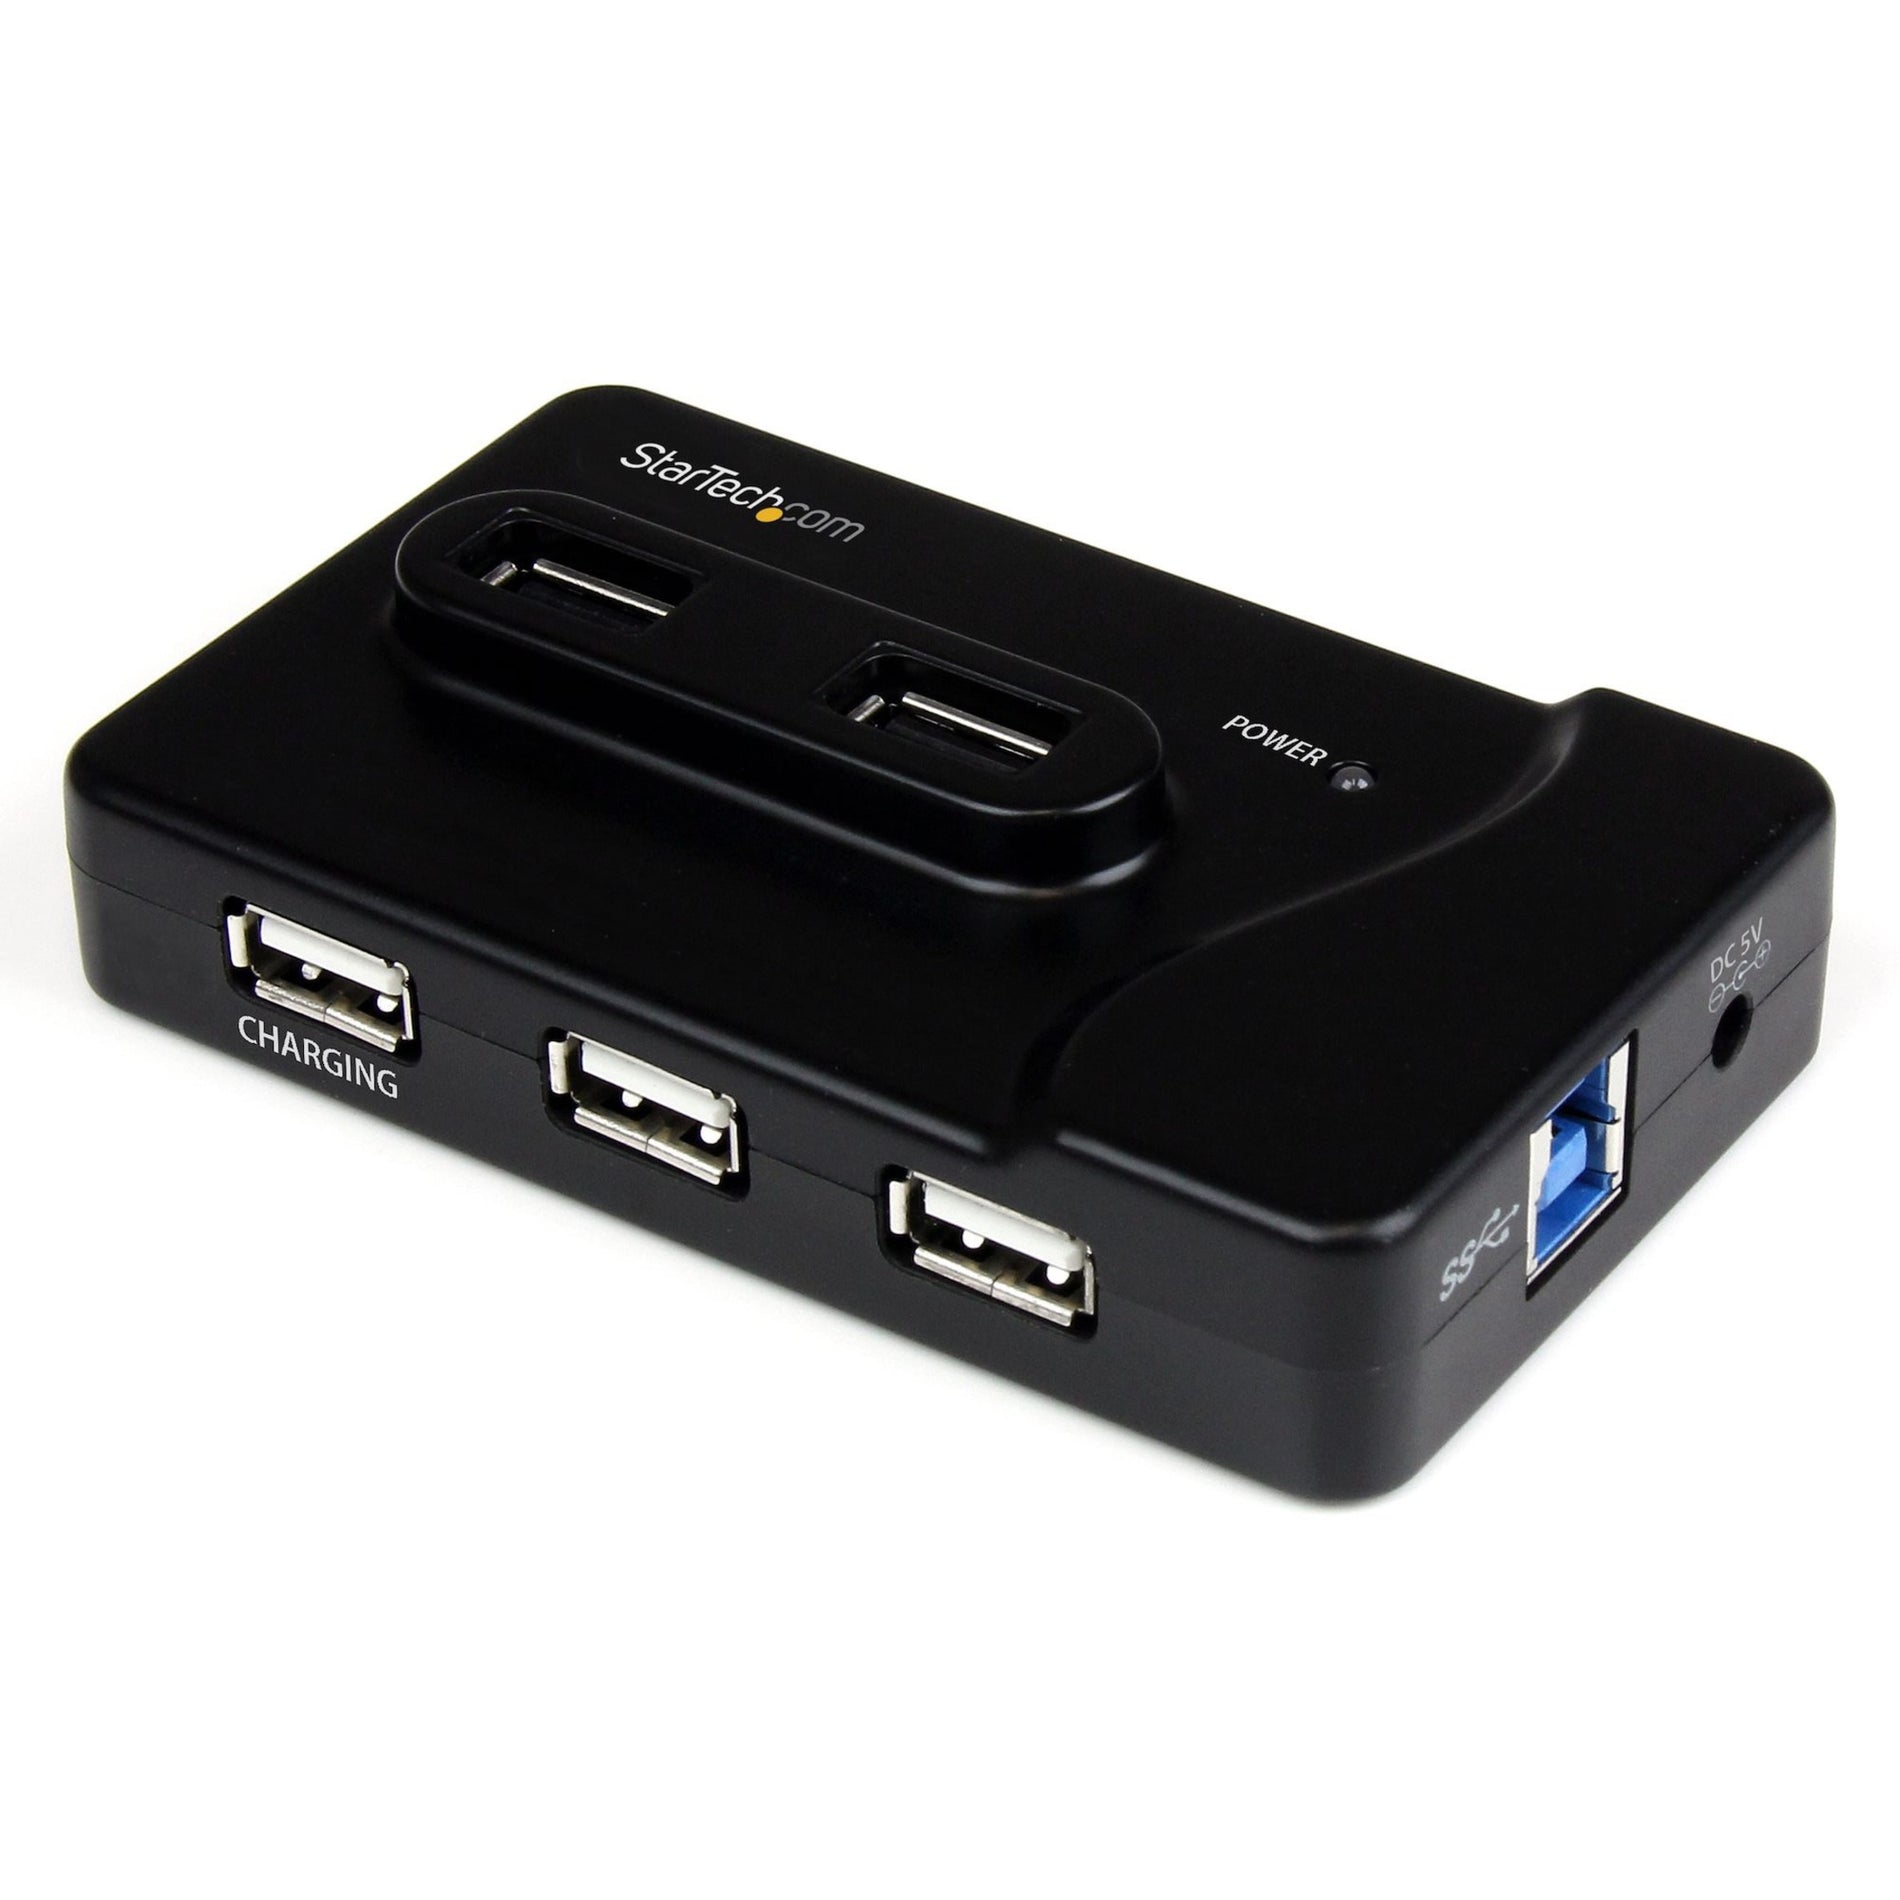 StarTech.com ST7320USBC 6-port USB 3.0/2.0 Combo Hub with Charging Port Amplia la tua connettività USB